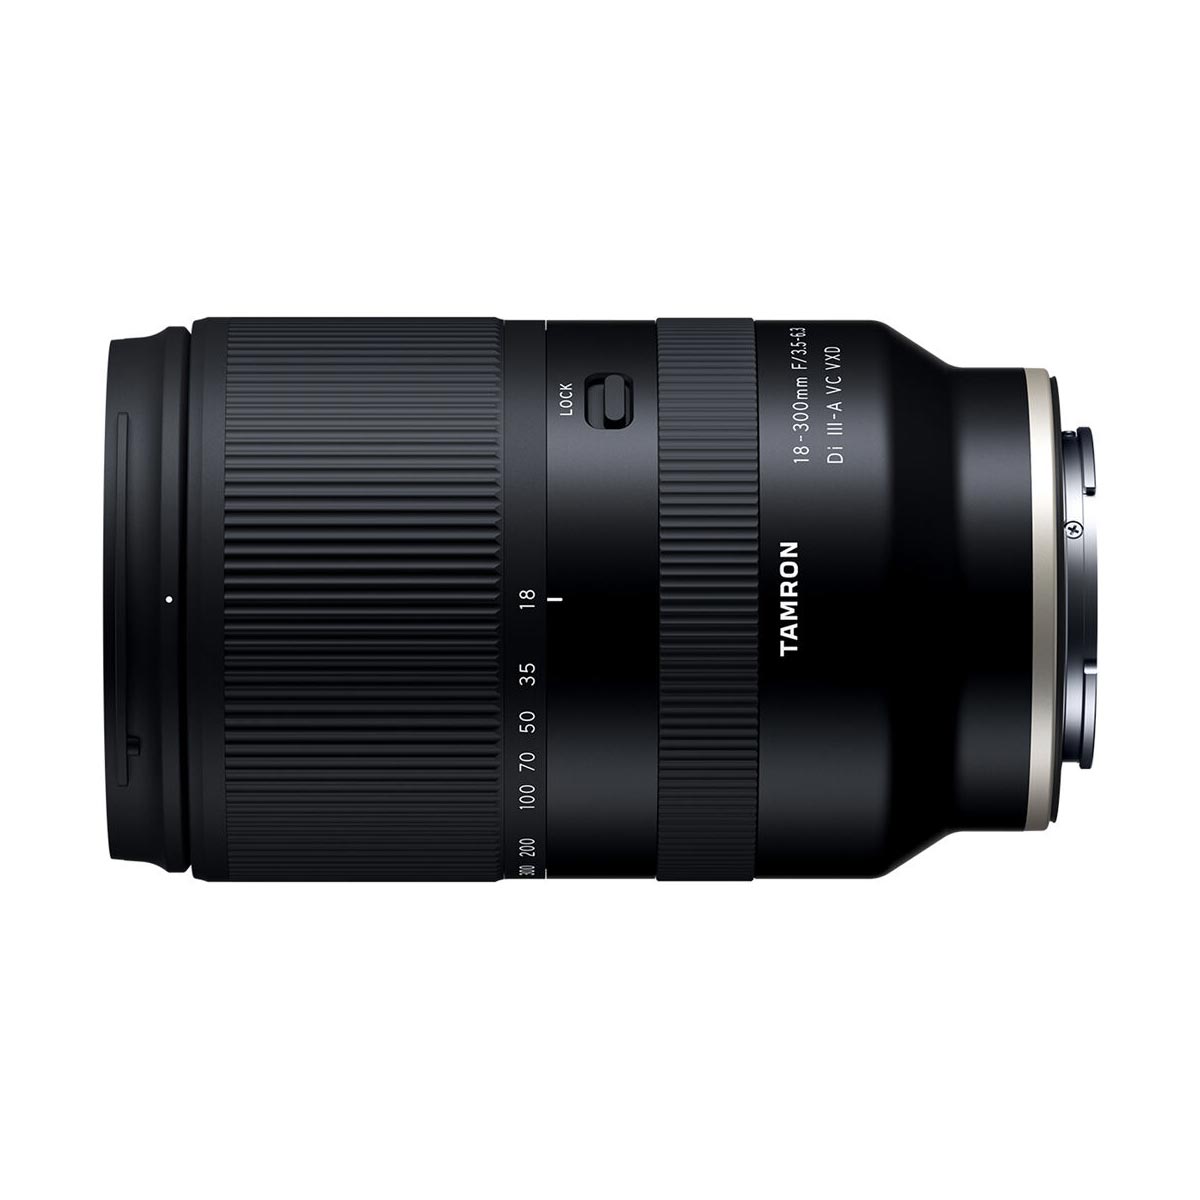 Tamron 18-300mm f/3.5-6.3 Di III-A VC VXD Lens for Fuji X *OPEN BOX*